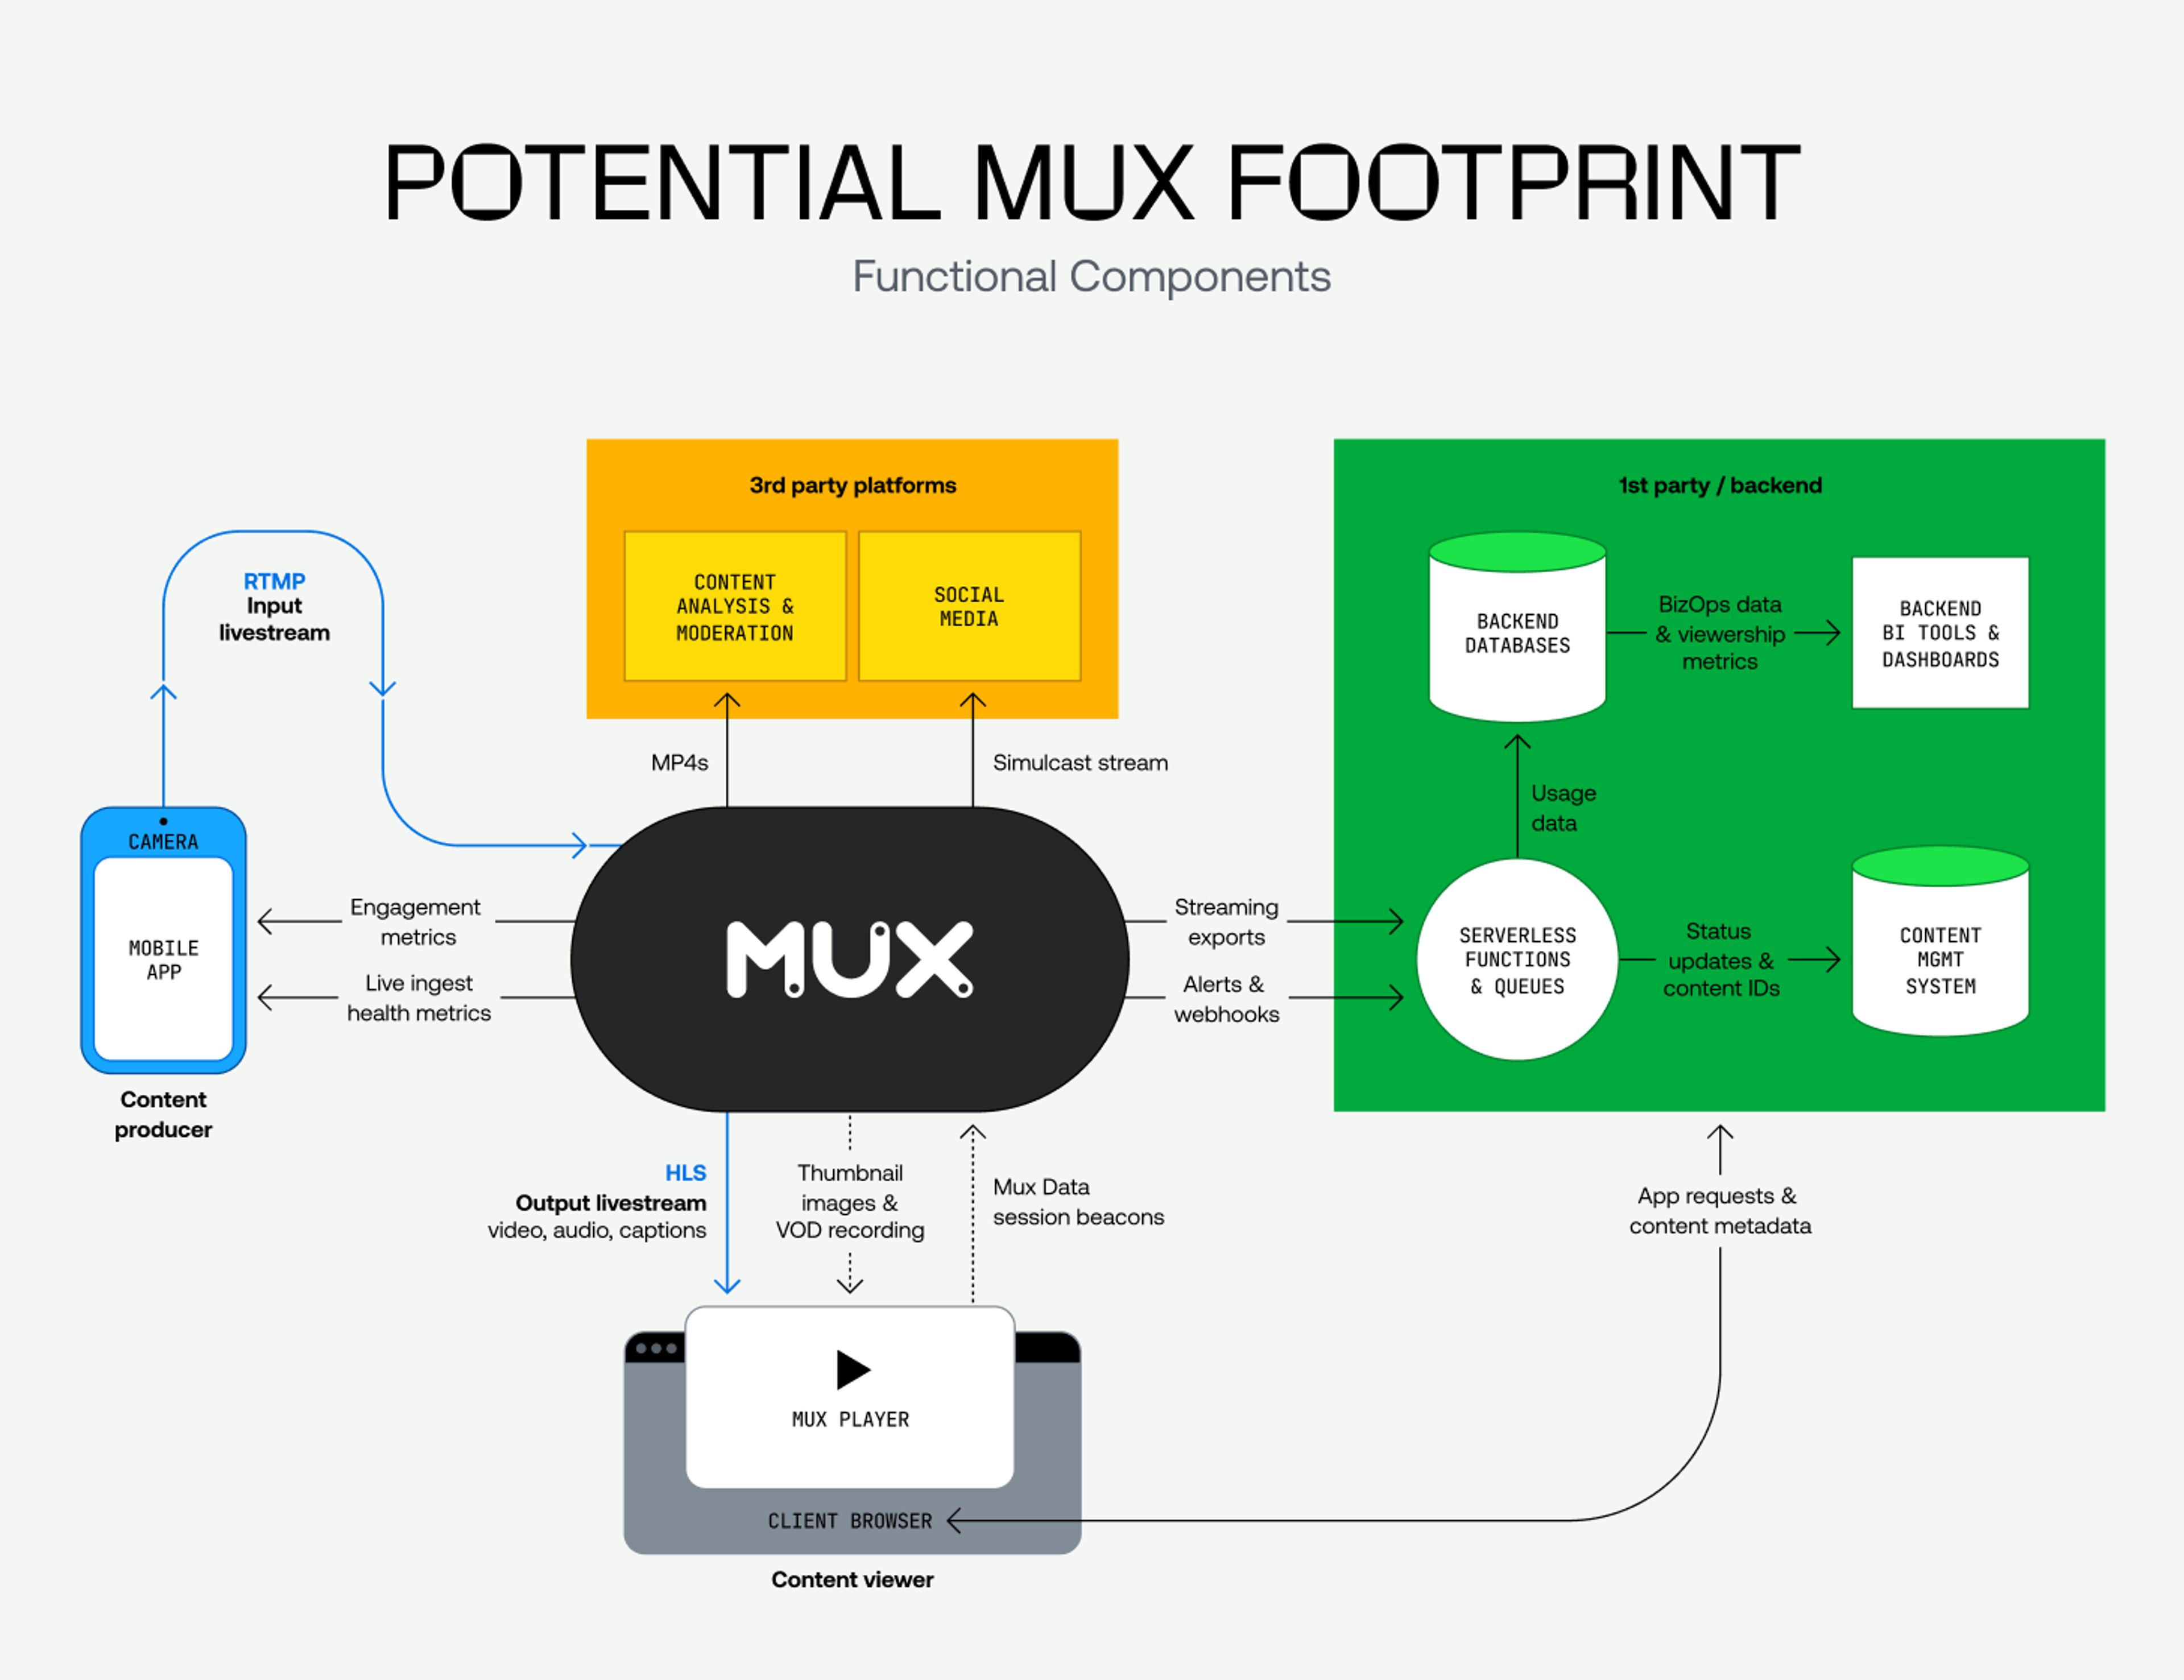 A diagram illustrating a potential mux footprint